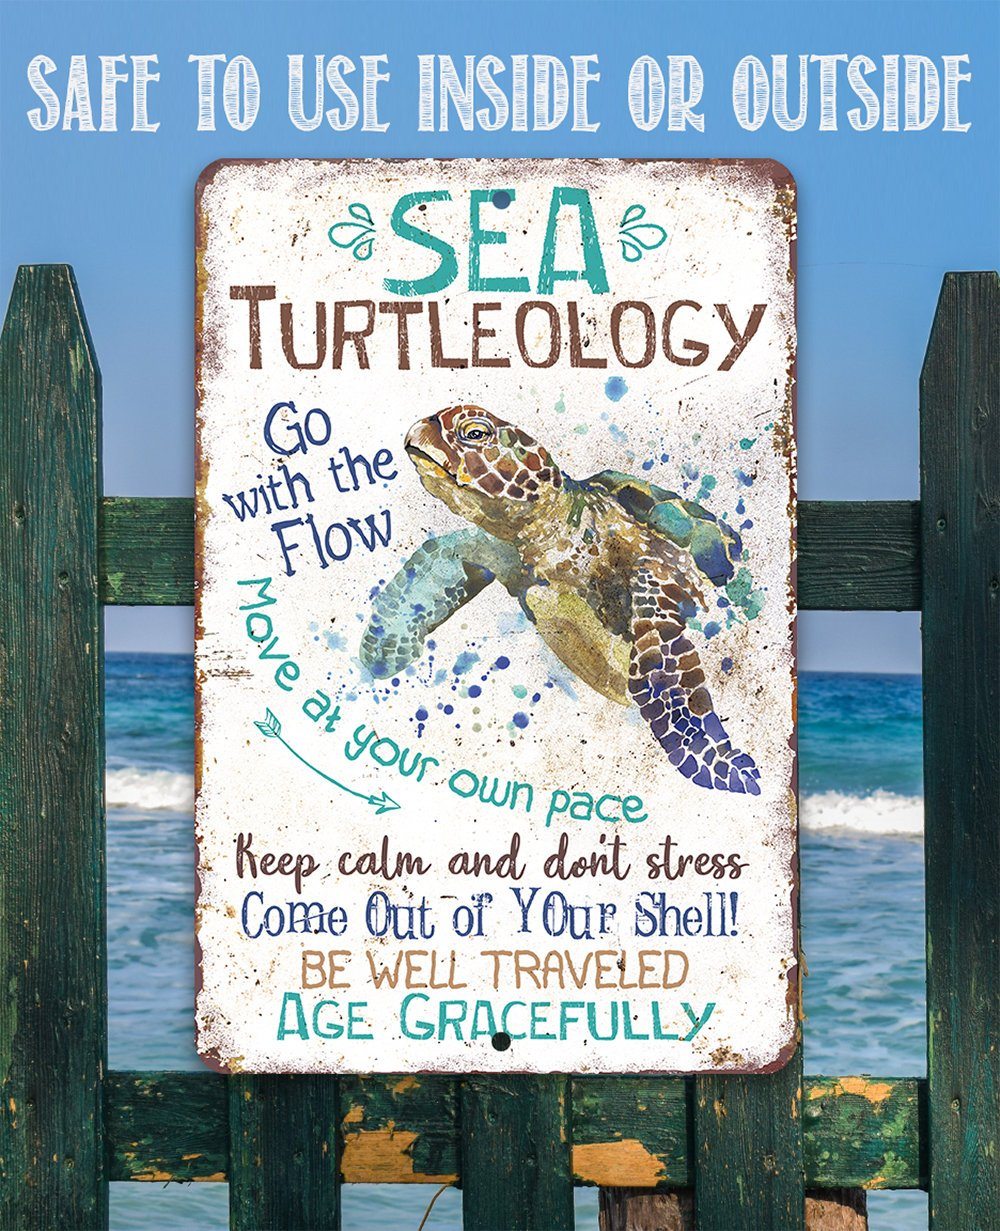 Sea Turtleology - Metal Sign | Lone Star Art.